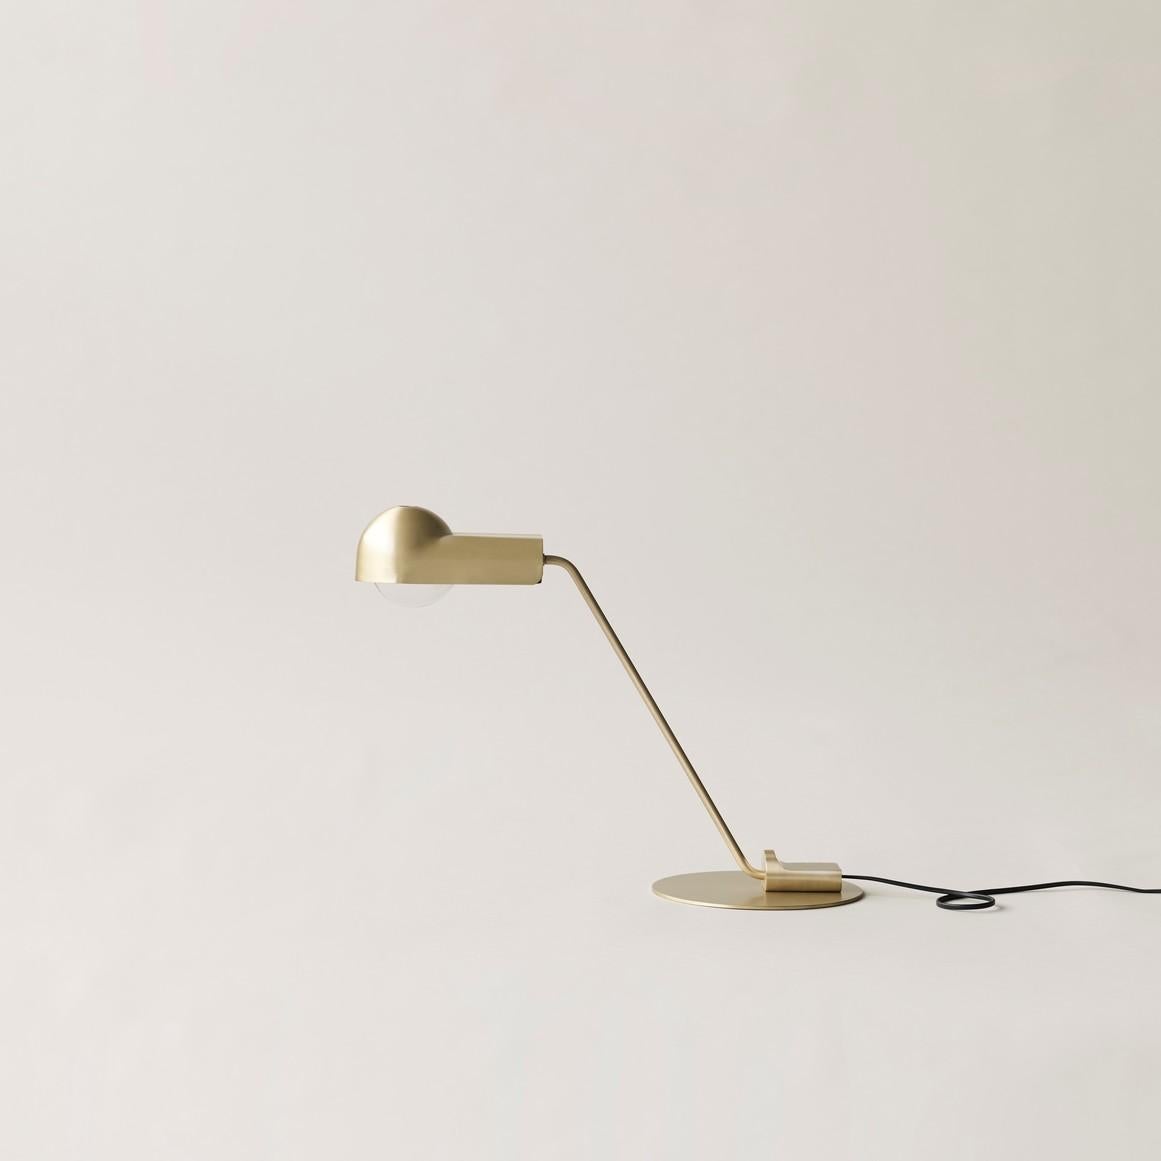 Set of Two Joe Colombo 'Domo' Brass Table Lamps by Karakter For Sale 1